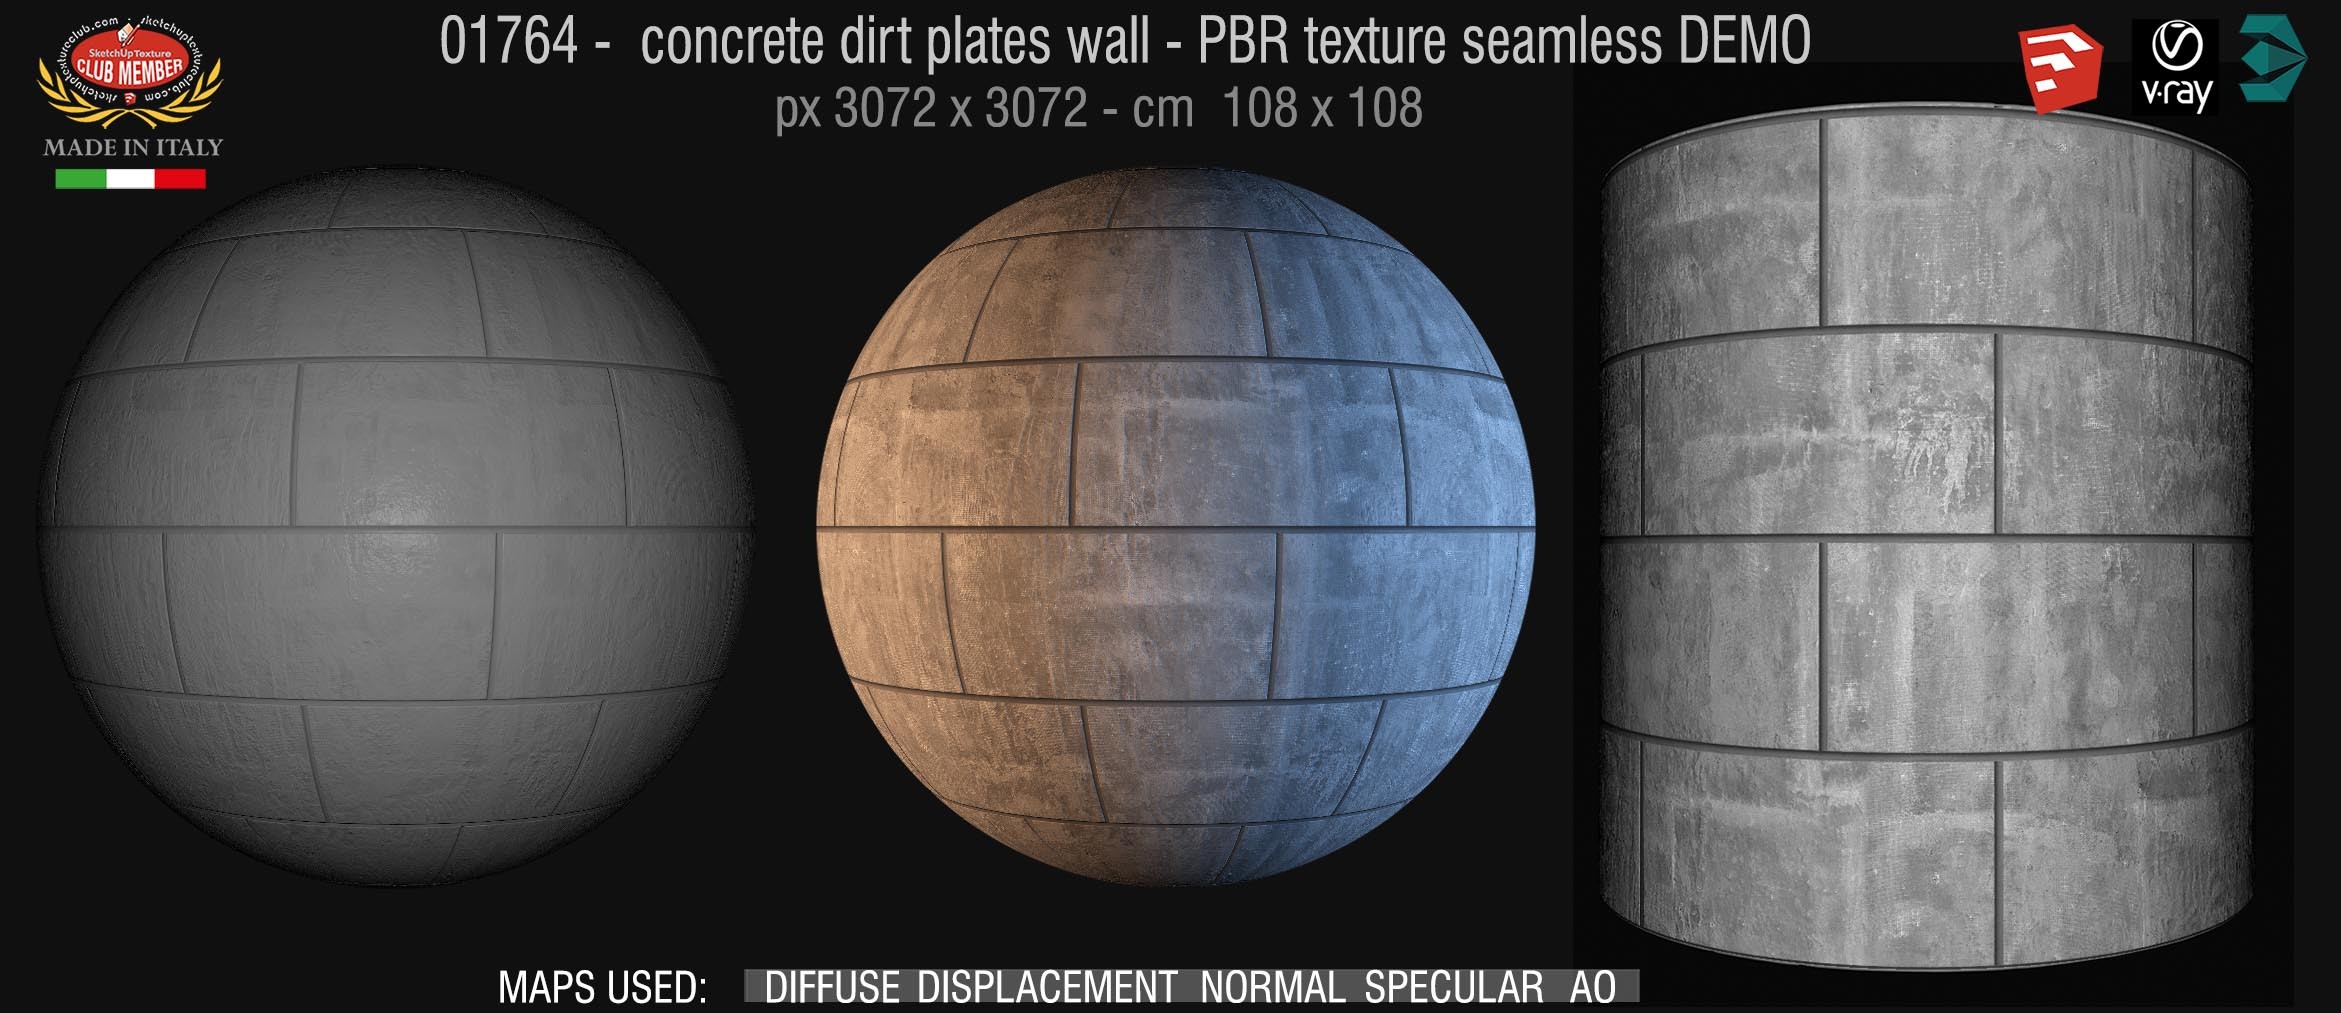 01764 concrete dirt plates wall PBR texture seamless DEMO